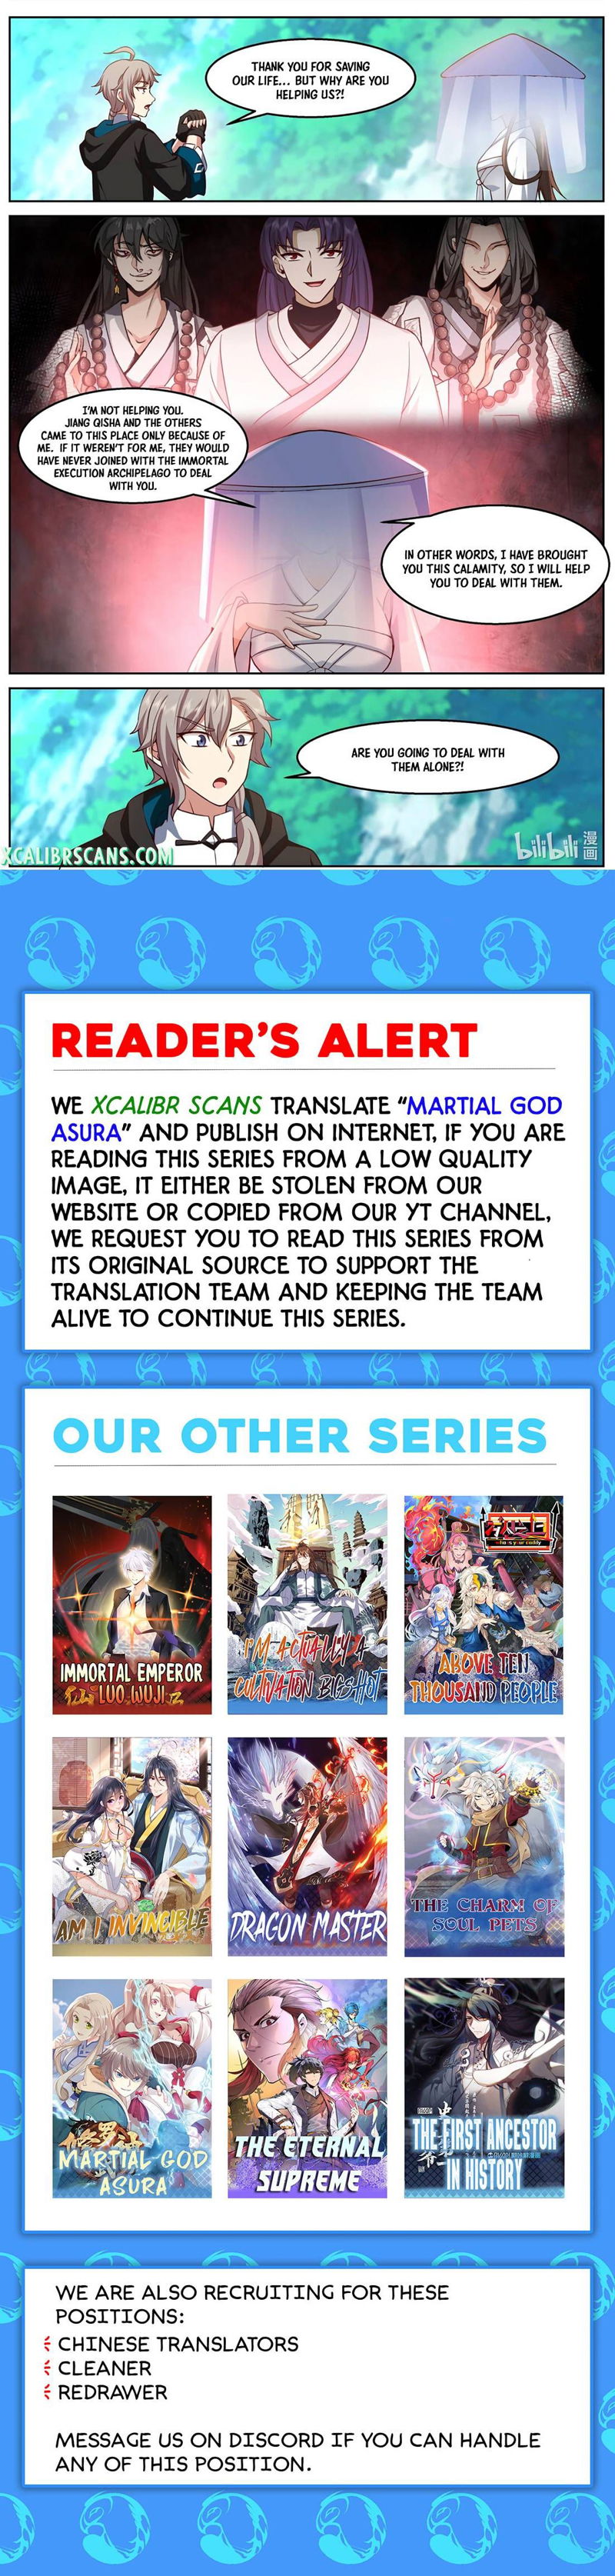 Martial God Asura Chapter 590 page 10